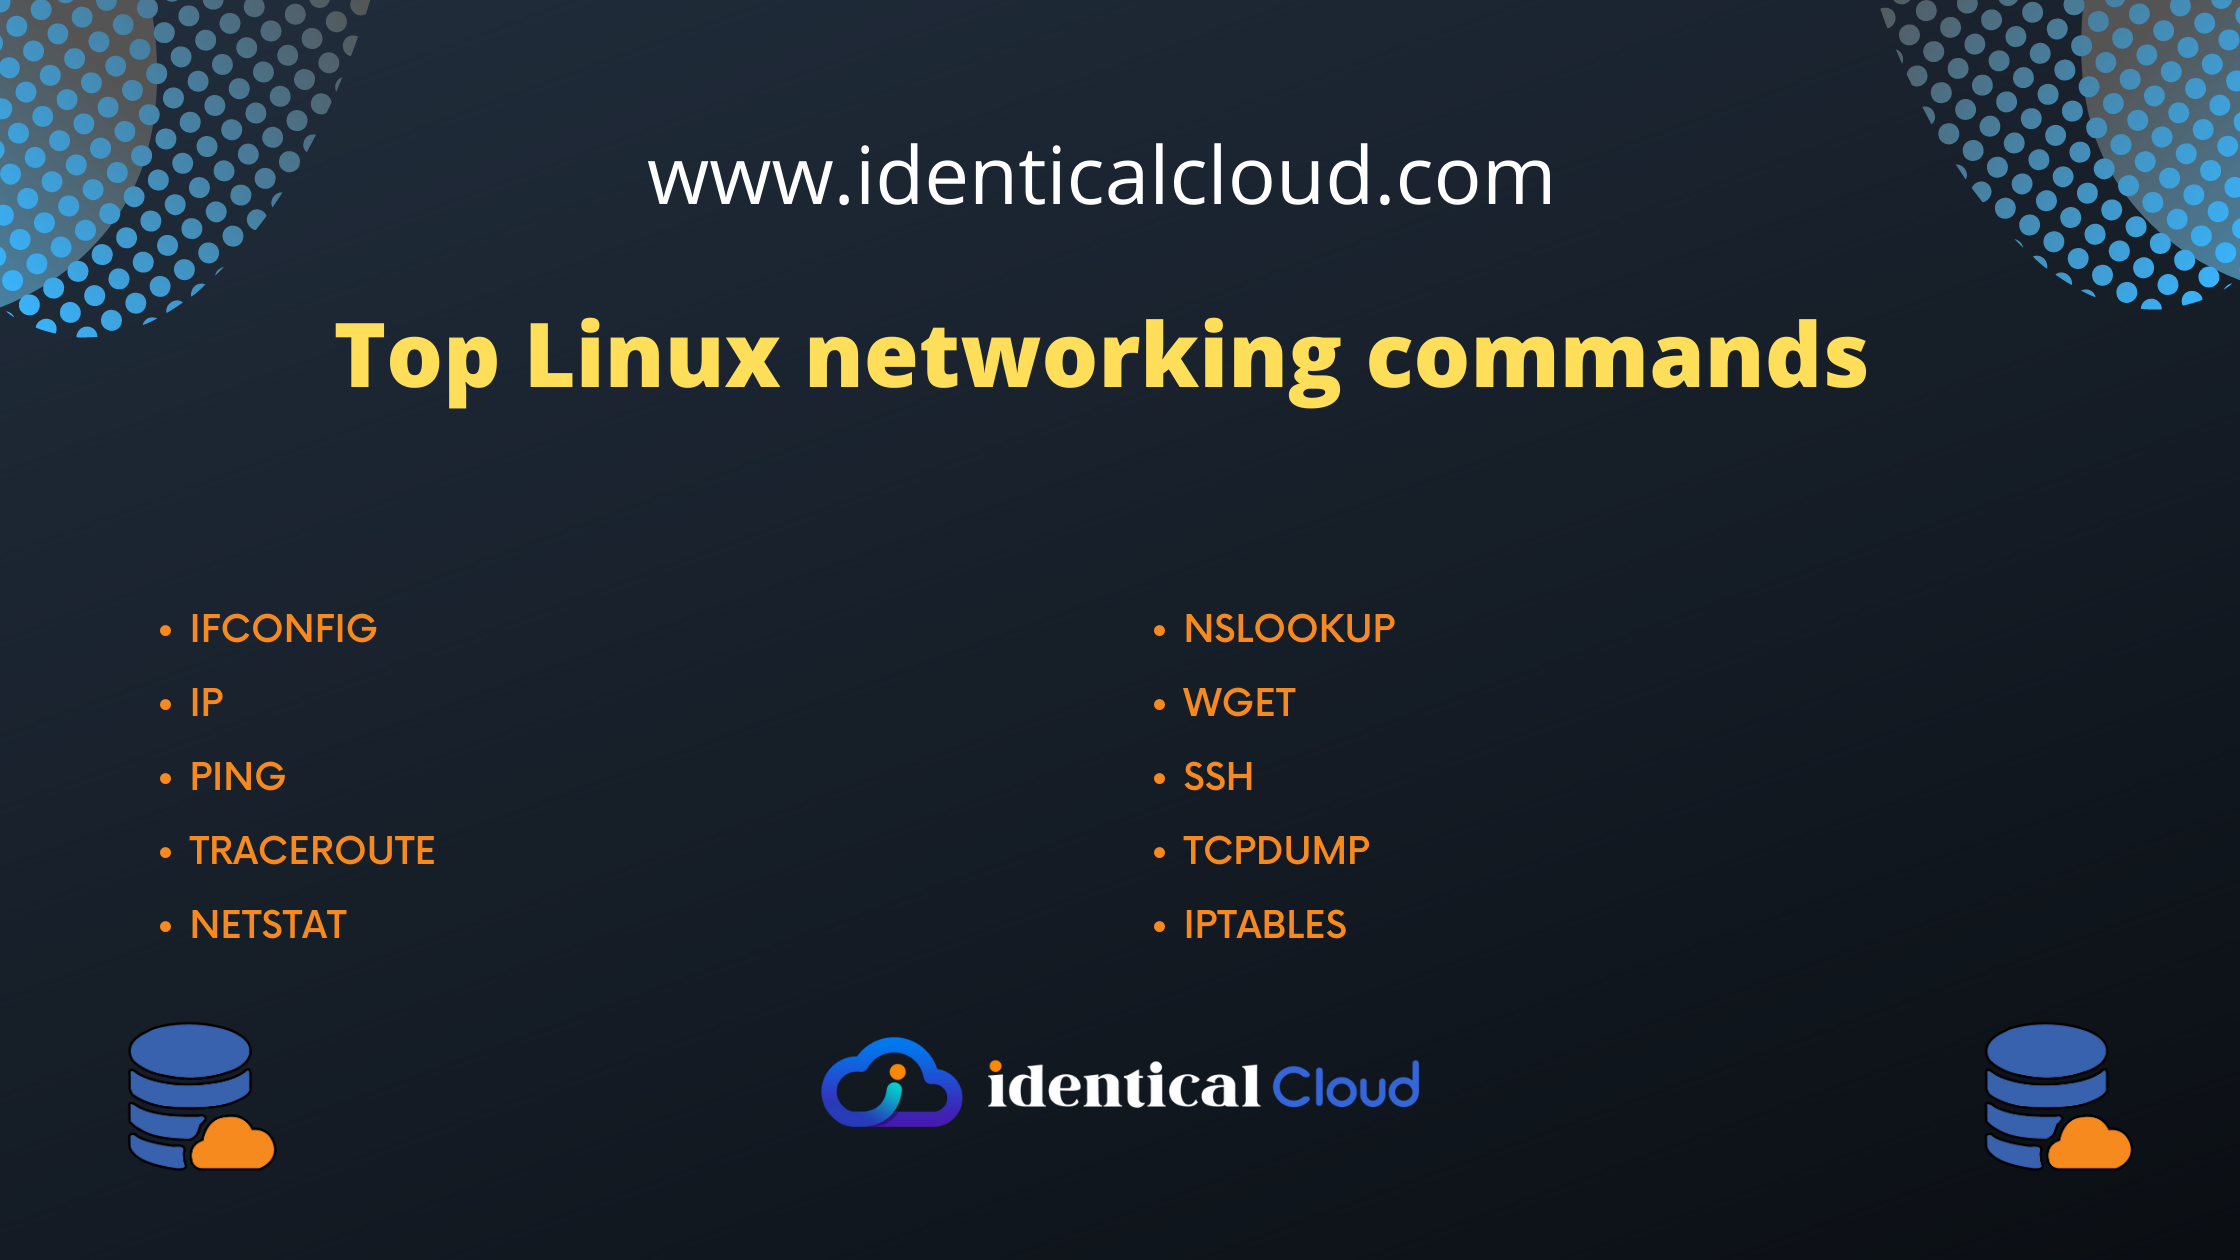 Top Linux networking commands - identicalcloud.com